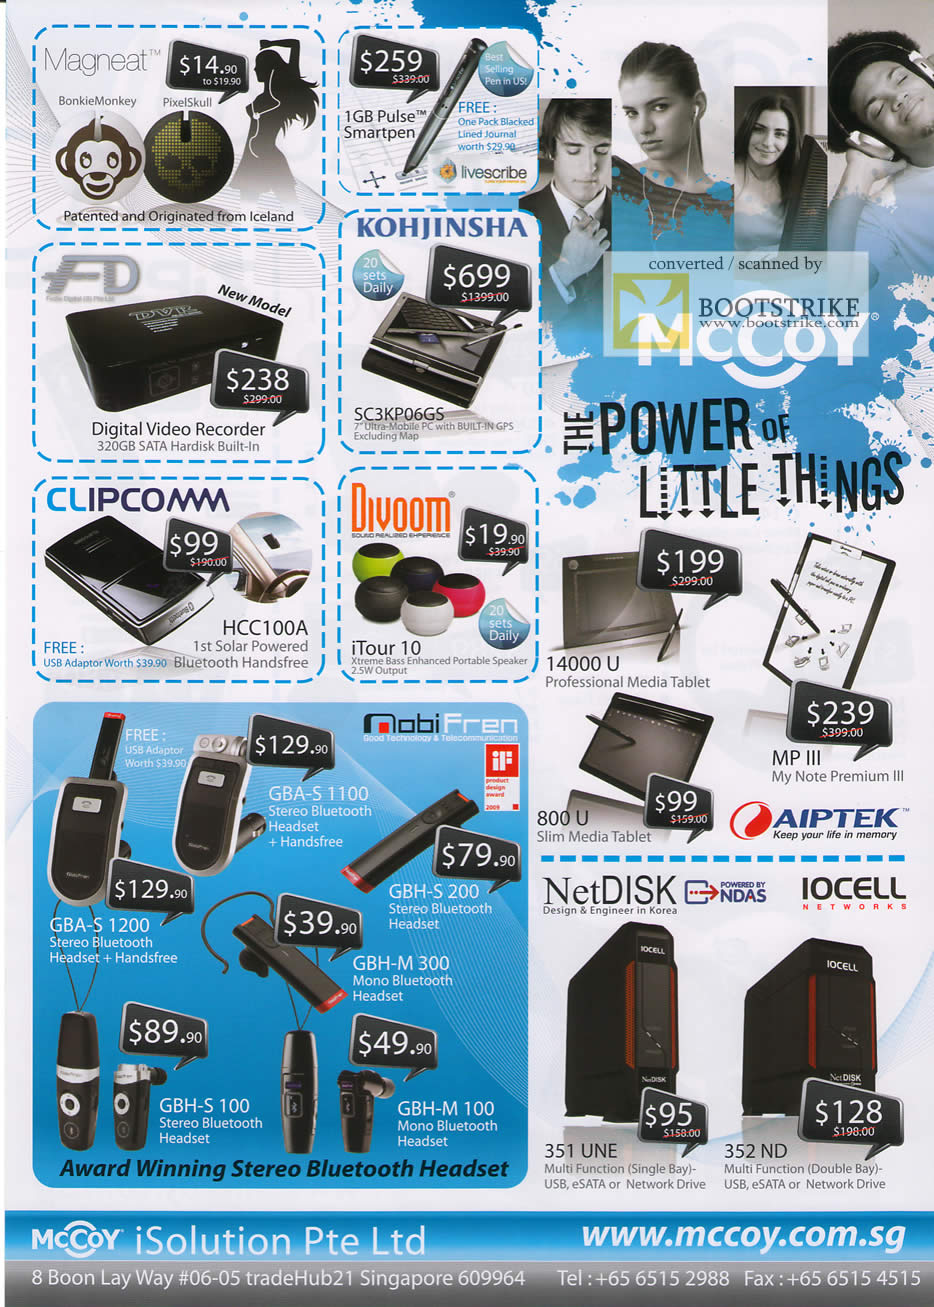 PC Show 2009 price list image brochure of Mccoy Magneat Pulse Pen Digital Video Recorder Speaker Bluetooth